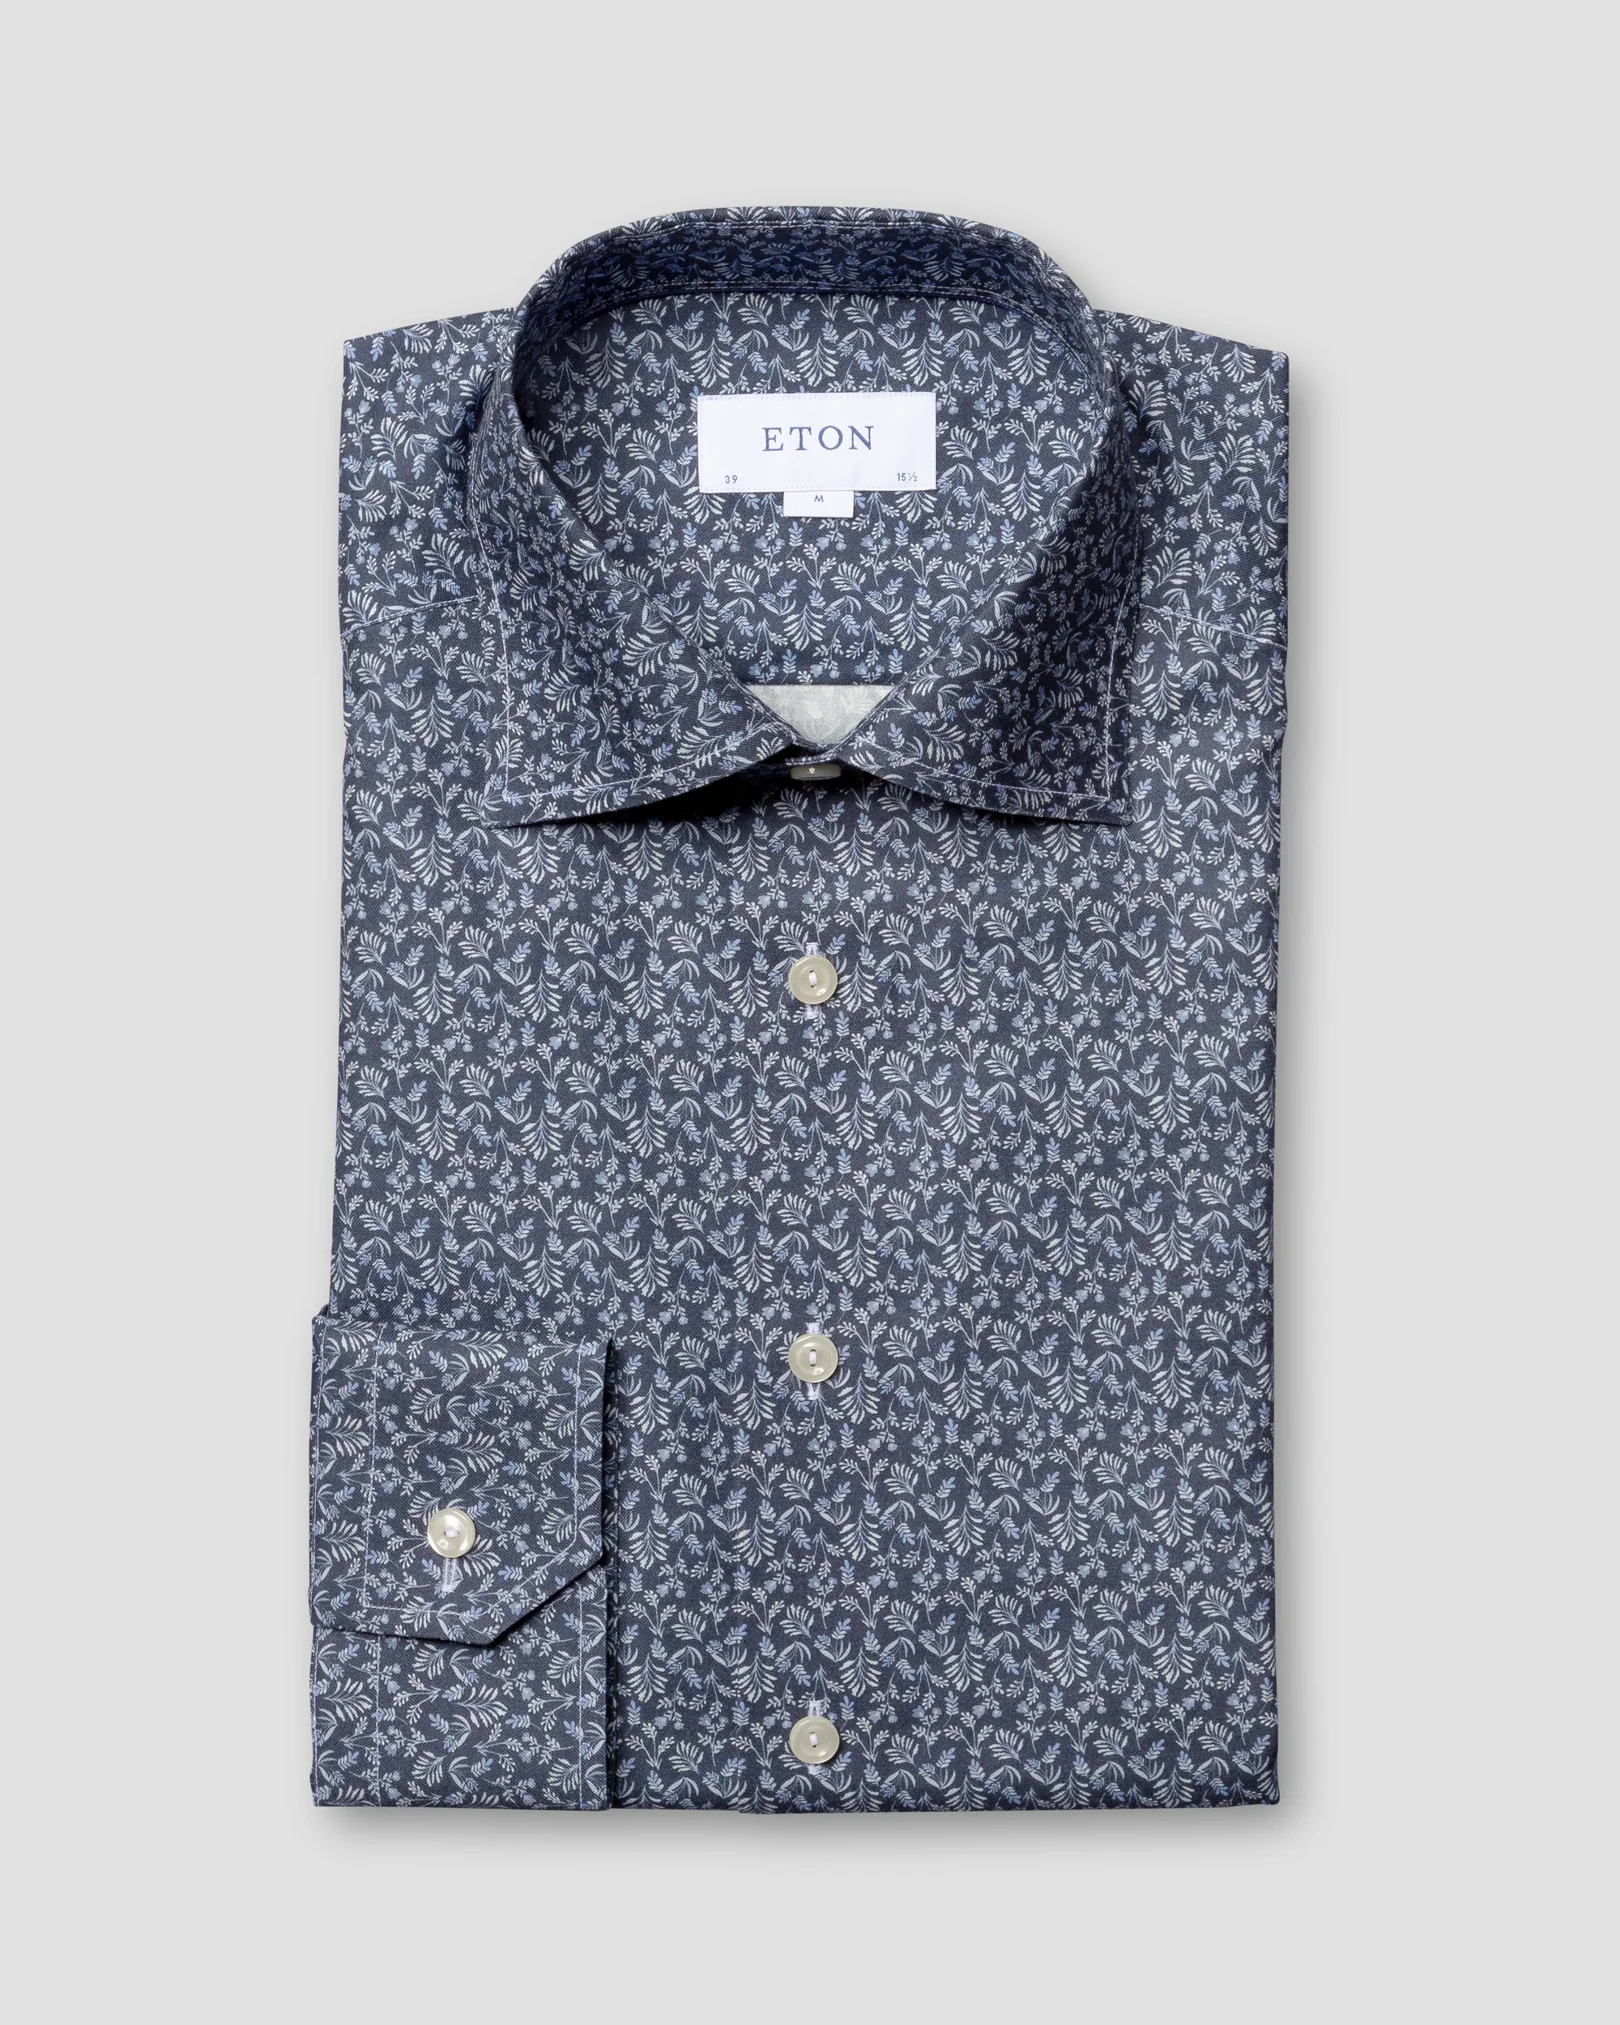 Eton - navy flannel floral print shirt